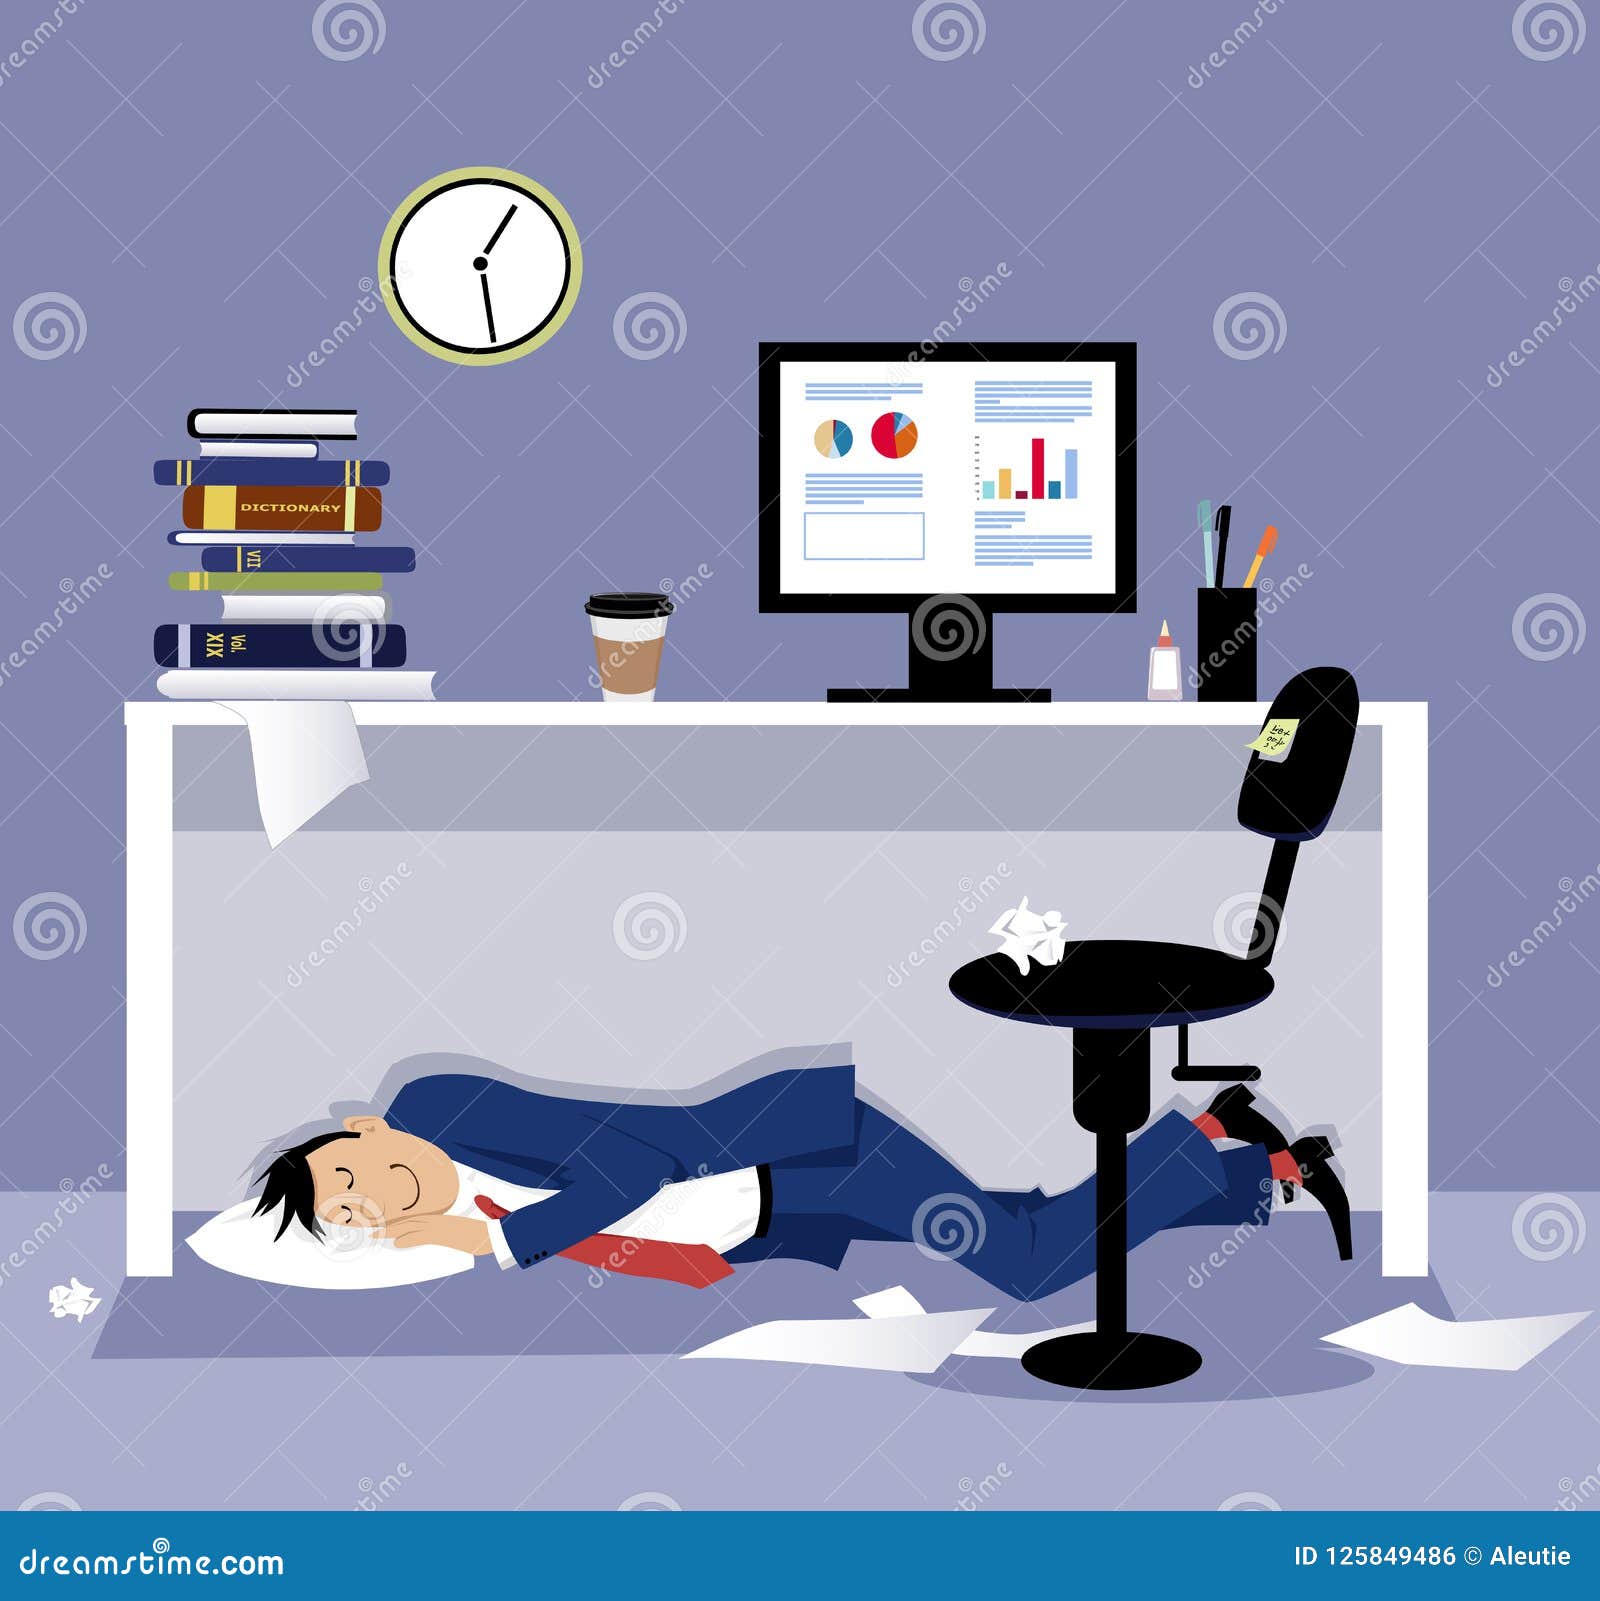 Sleeping In The Office Stock Vector Illustration Of Desk 125849486